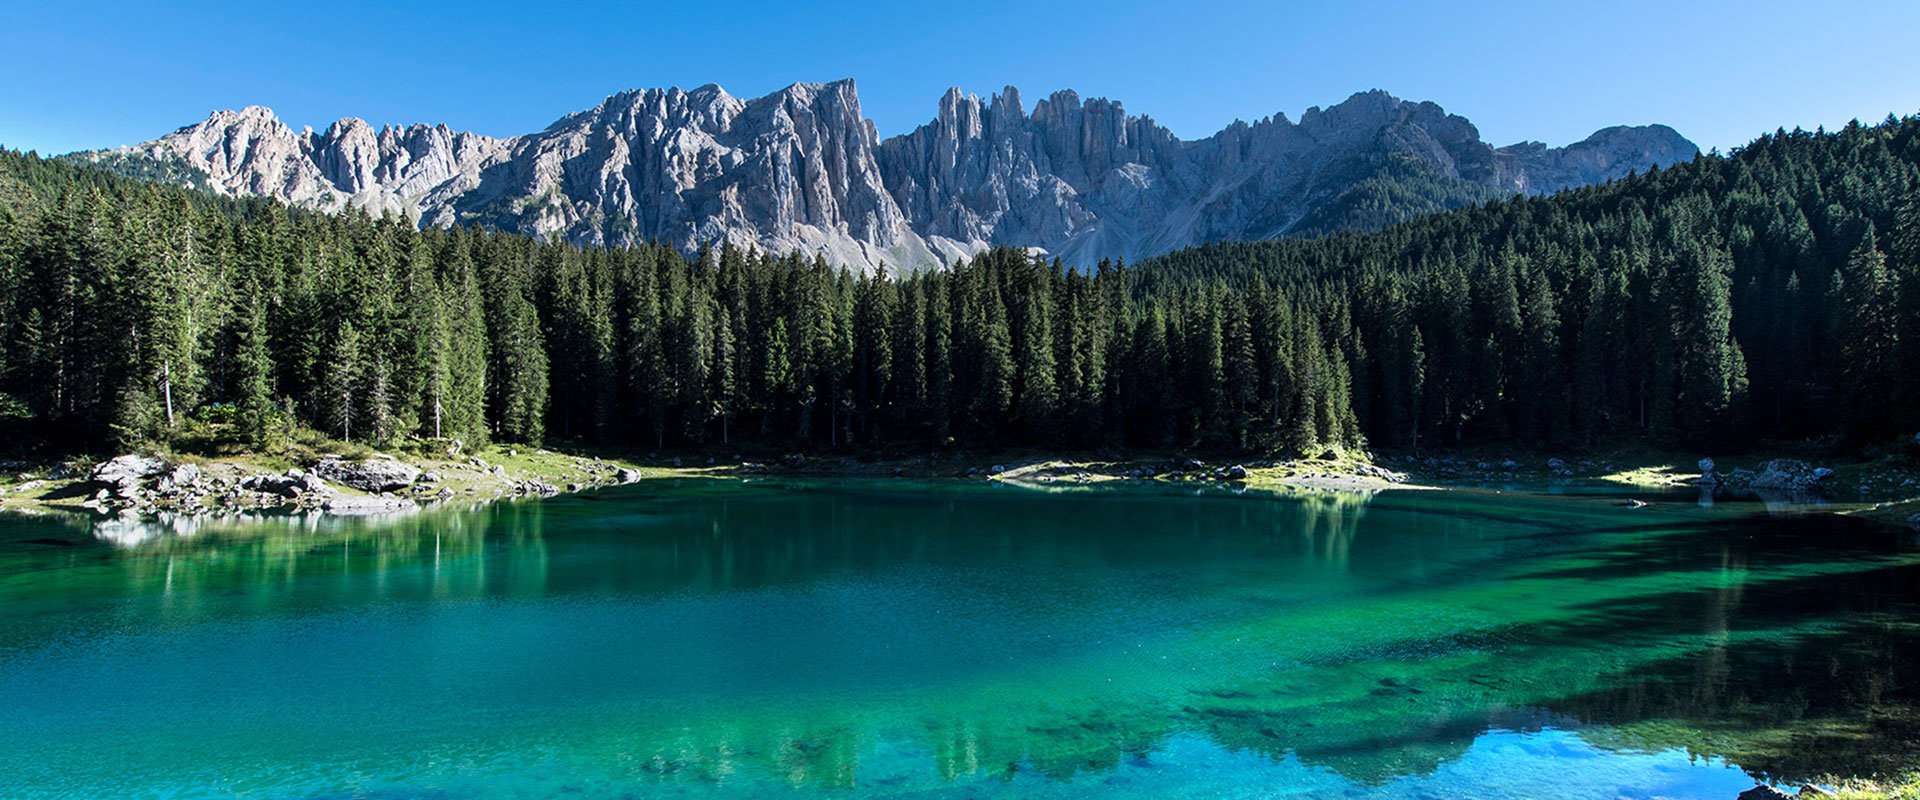 Lake Carezza beautiful in the Alps